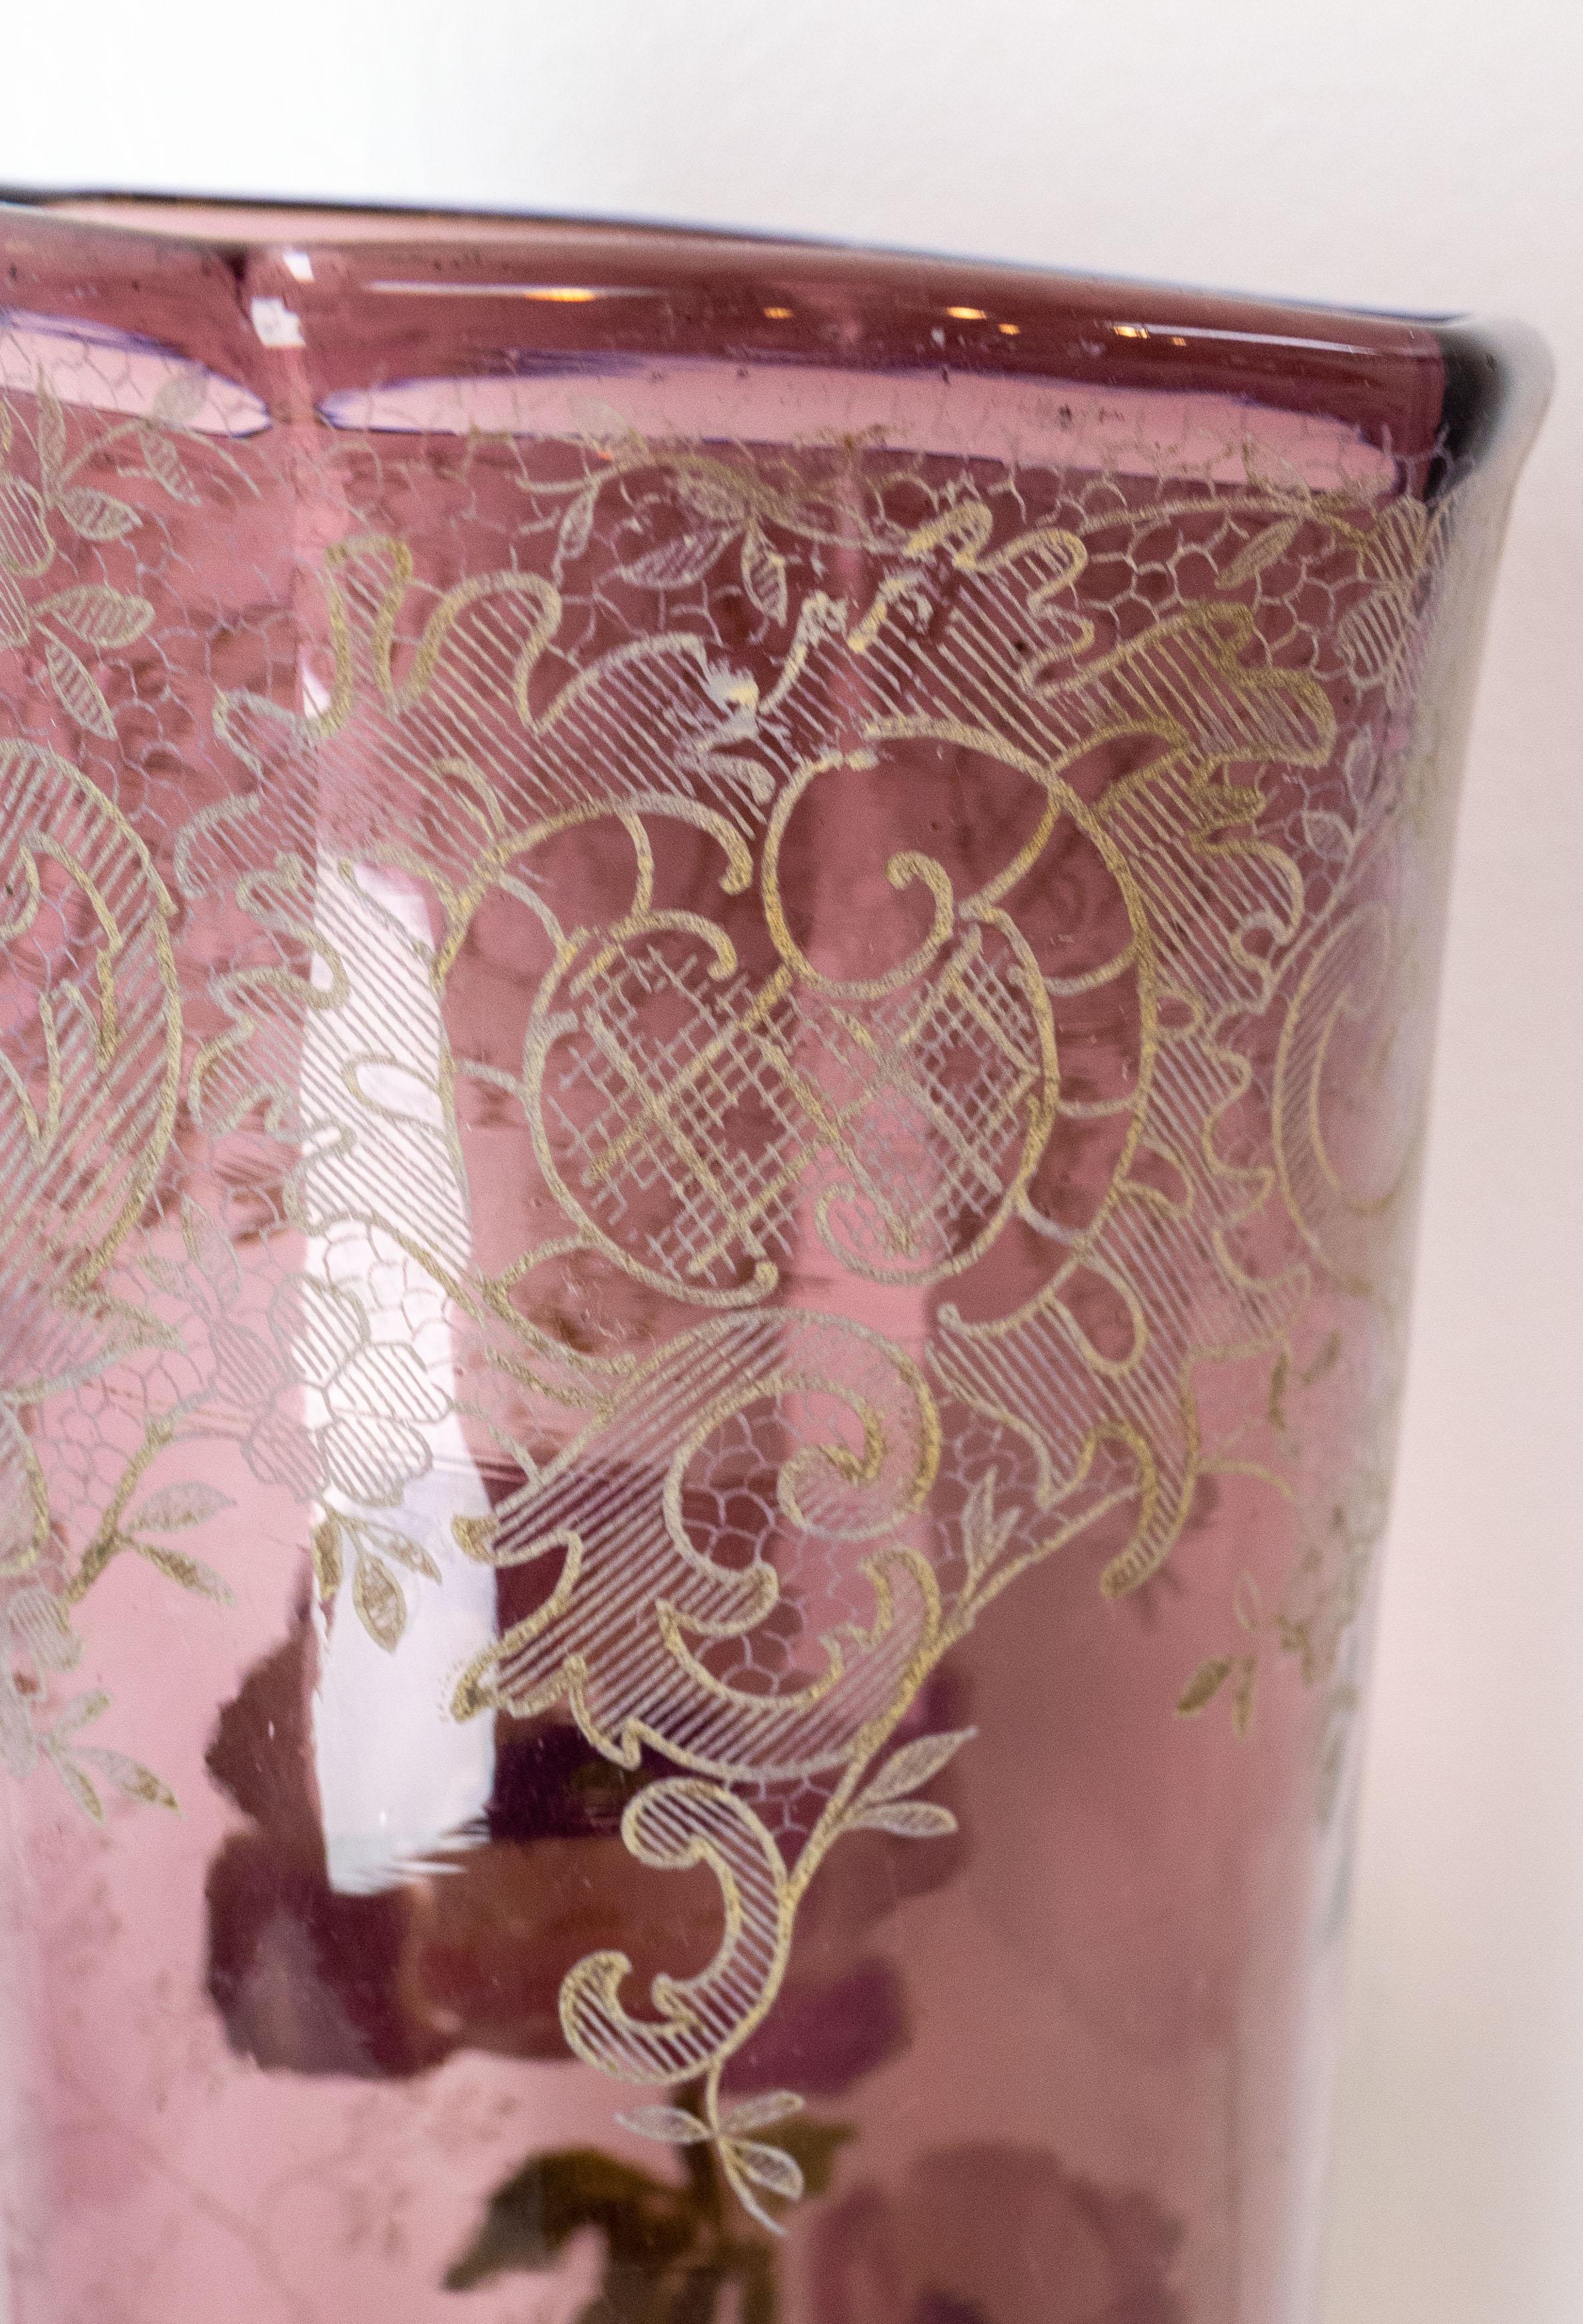 French Enamelled Glass Vase with Flowers Decoration Legras Art Nouveau, c. 1900 For Sale 4